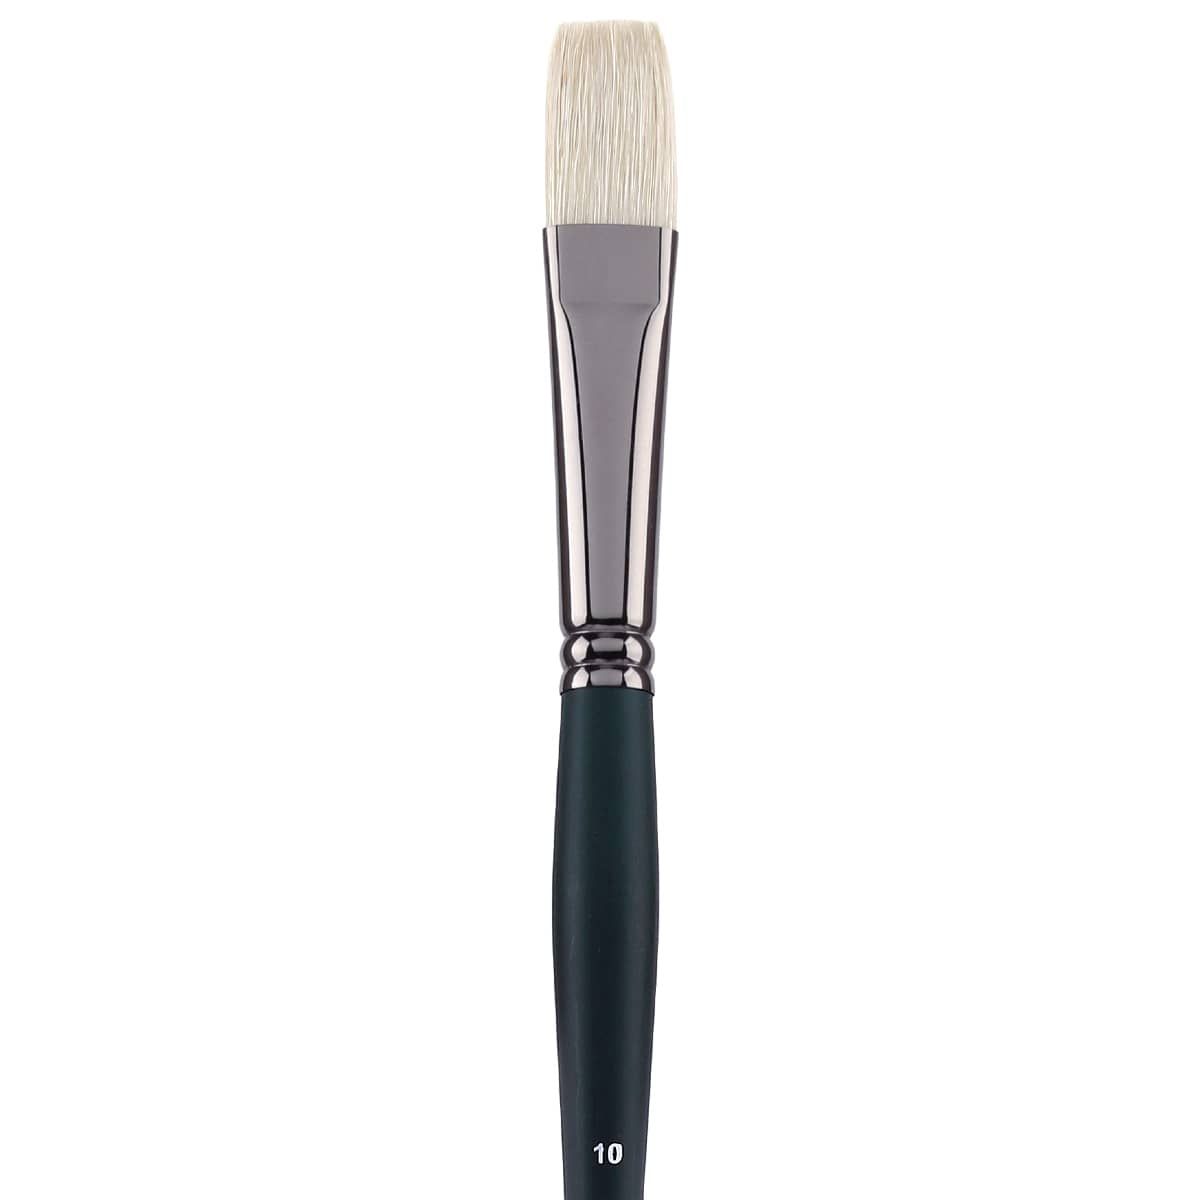 Imperial Professional Chungking Hog Bristle Brush, Flat Size #10